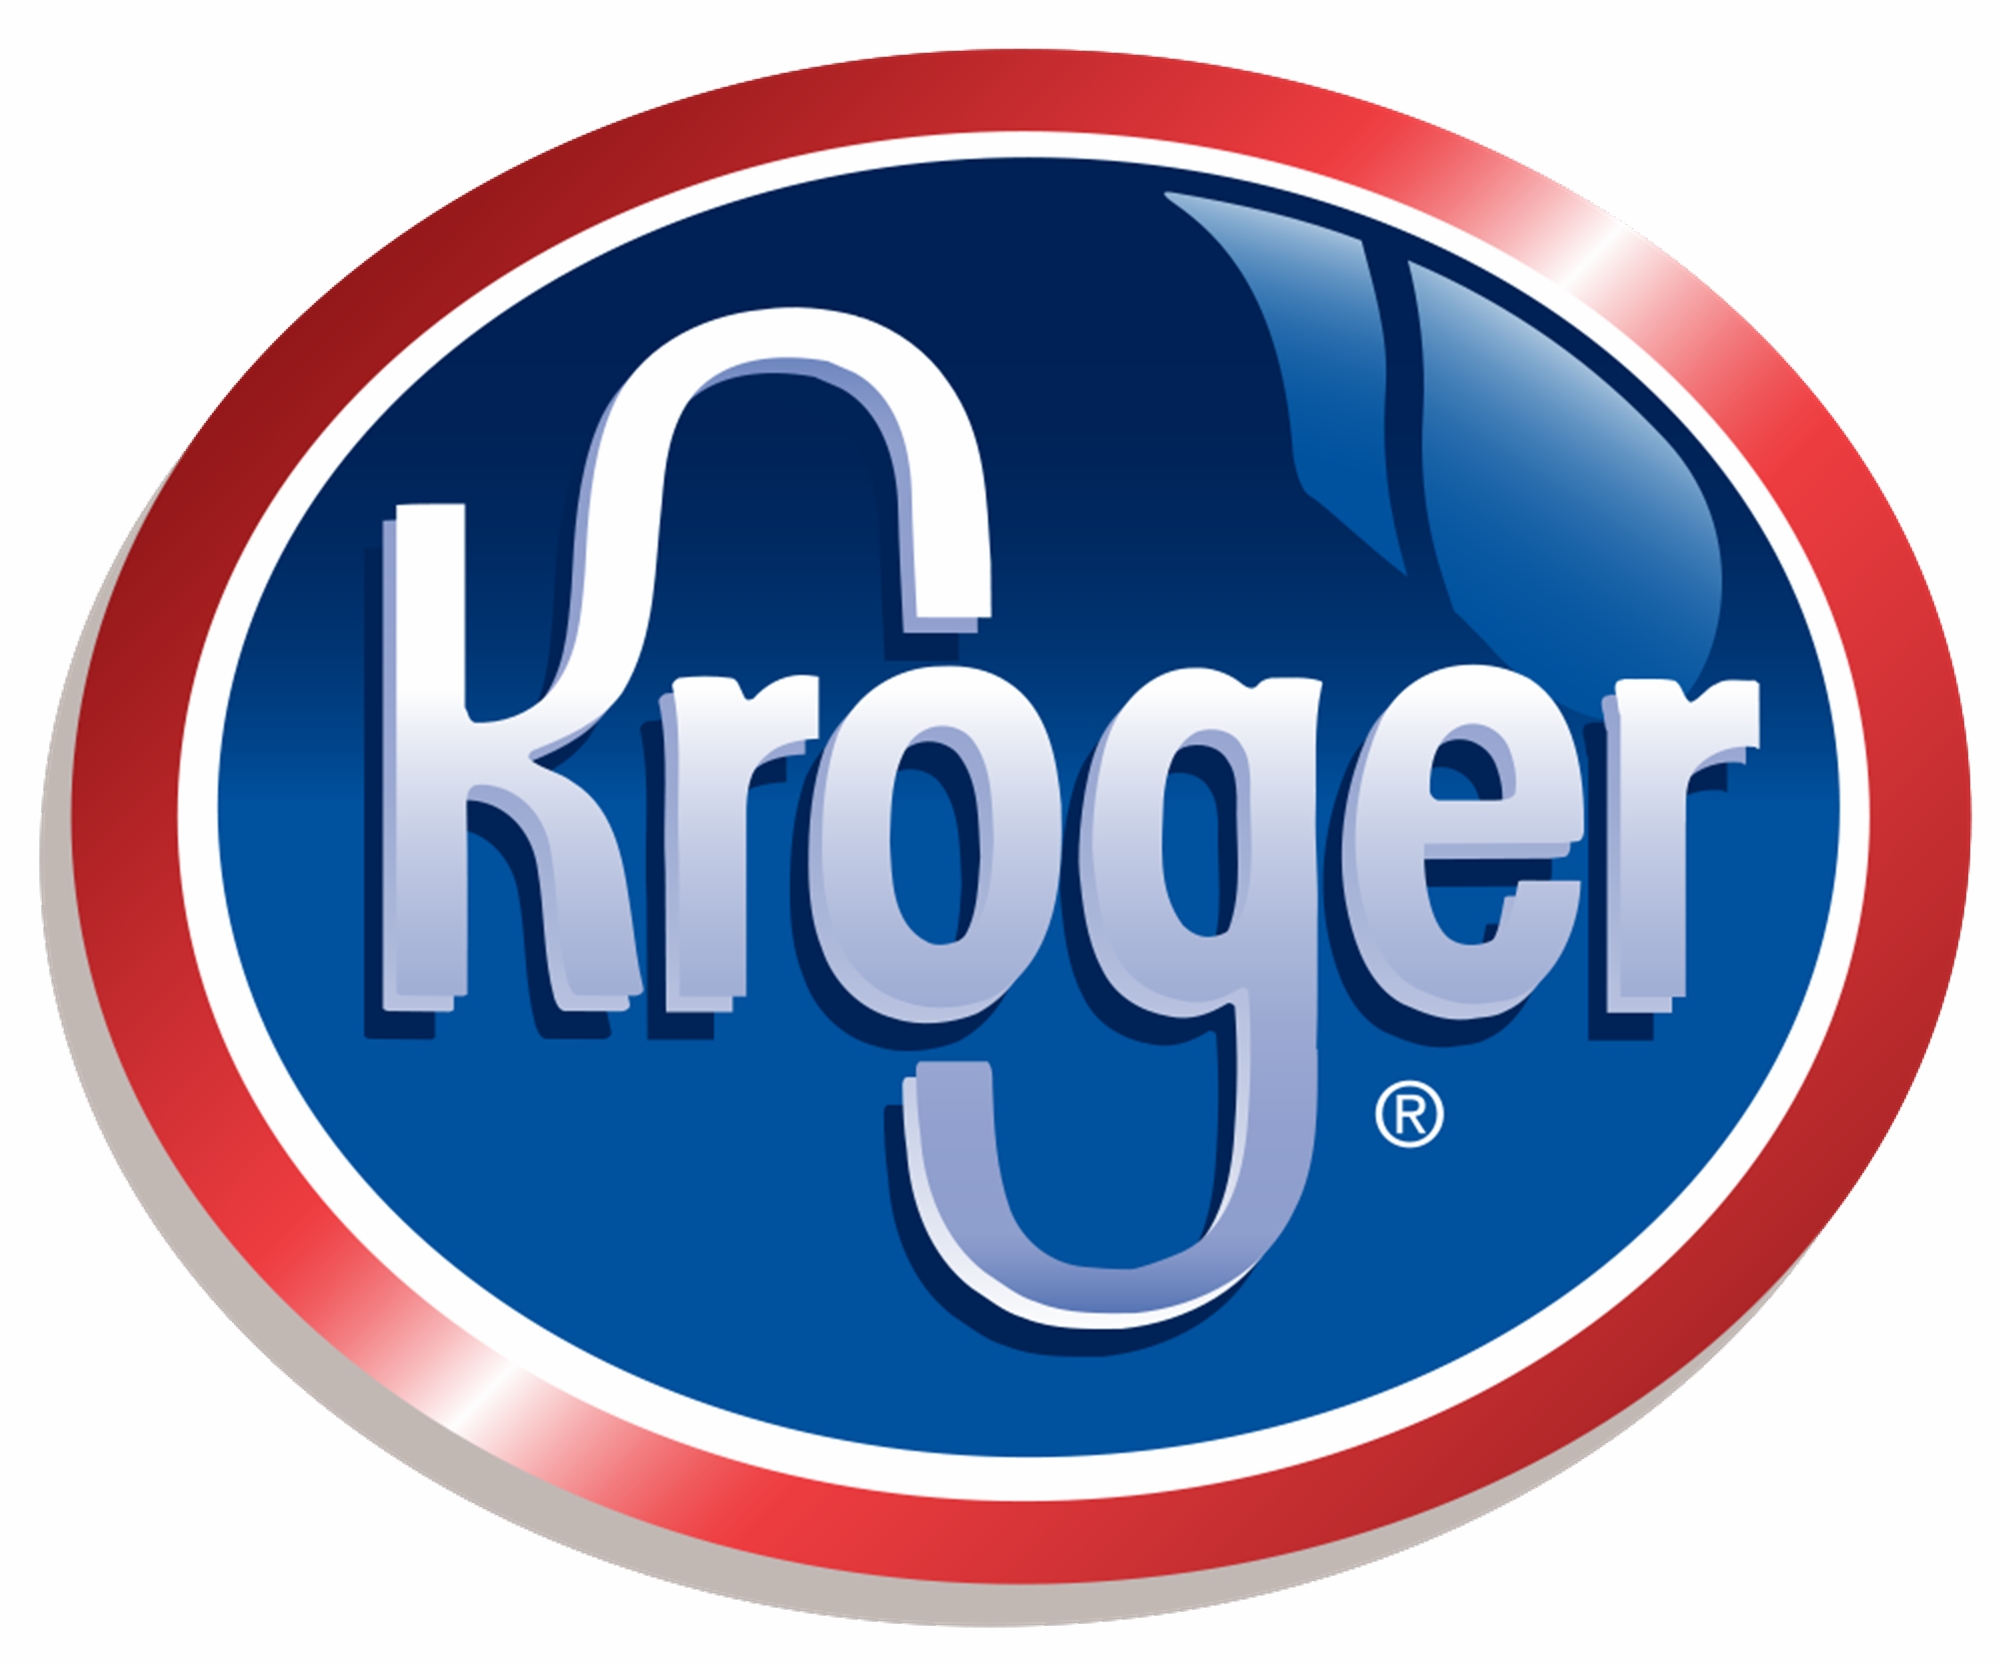 Kroger Gift Card Register, Activate, Manage & Check Balance